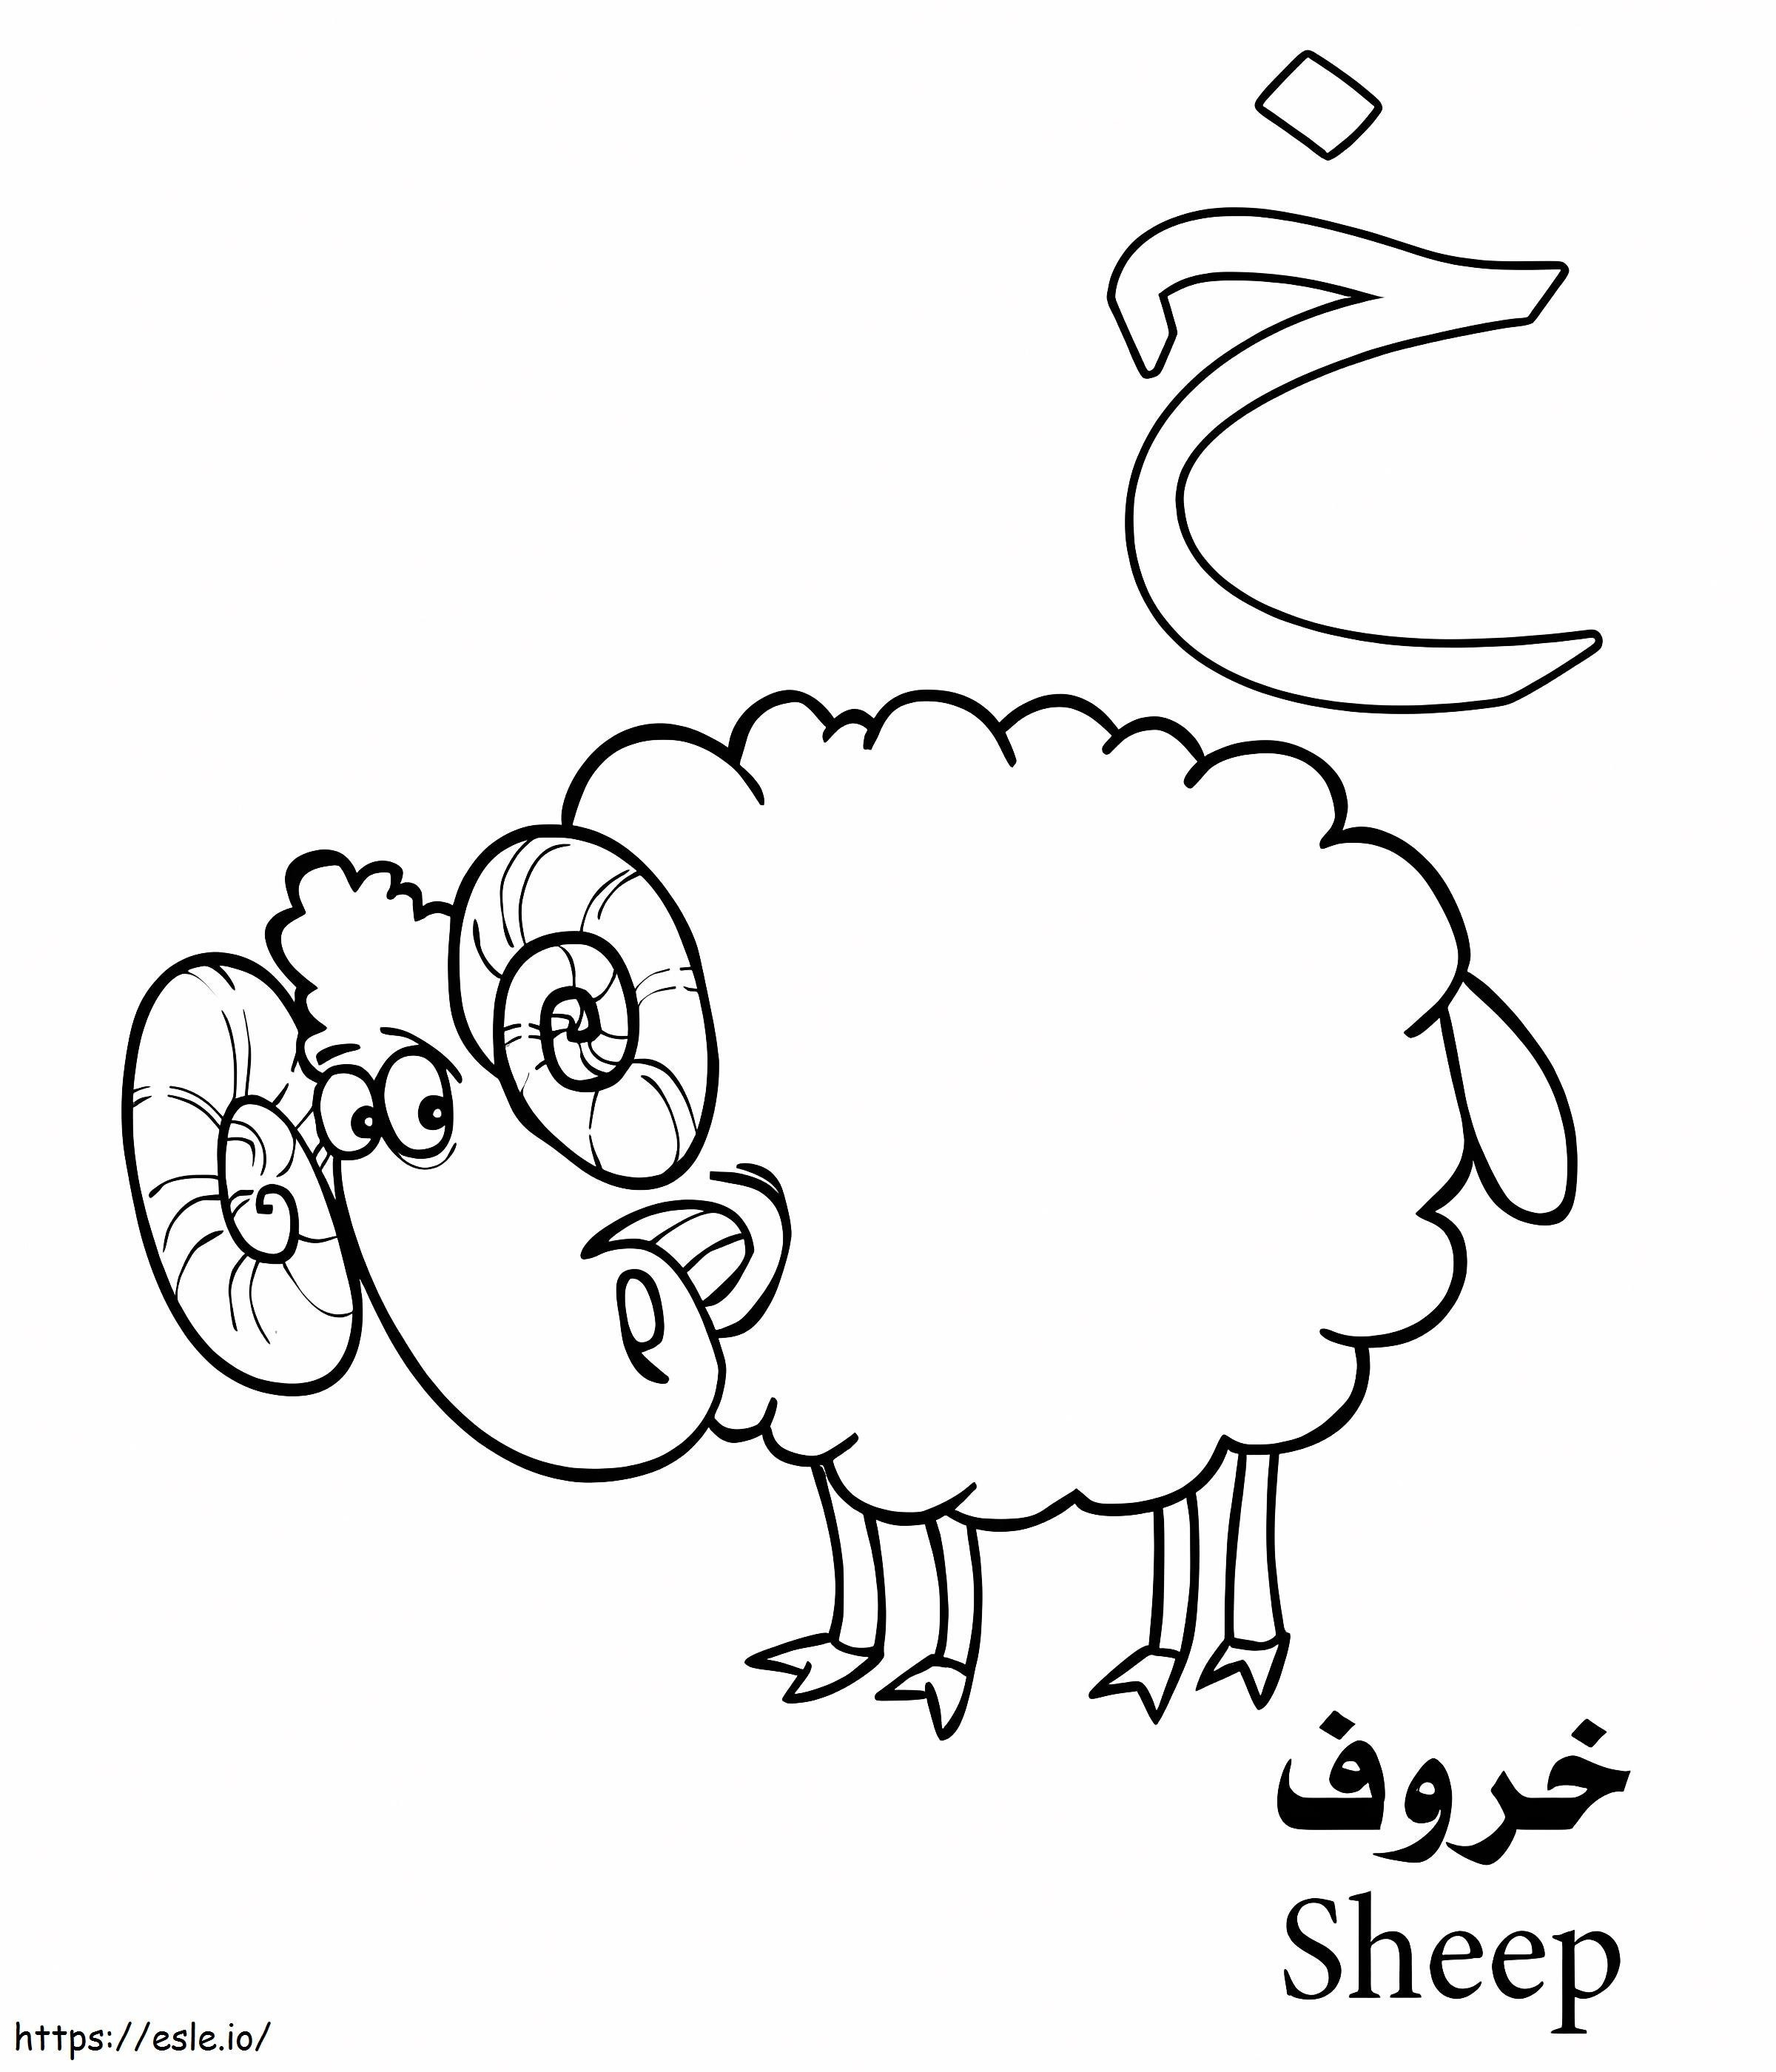 Sheep Arabic Alphabet coloring page